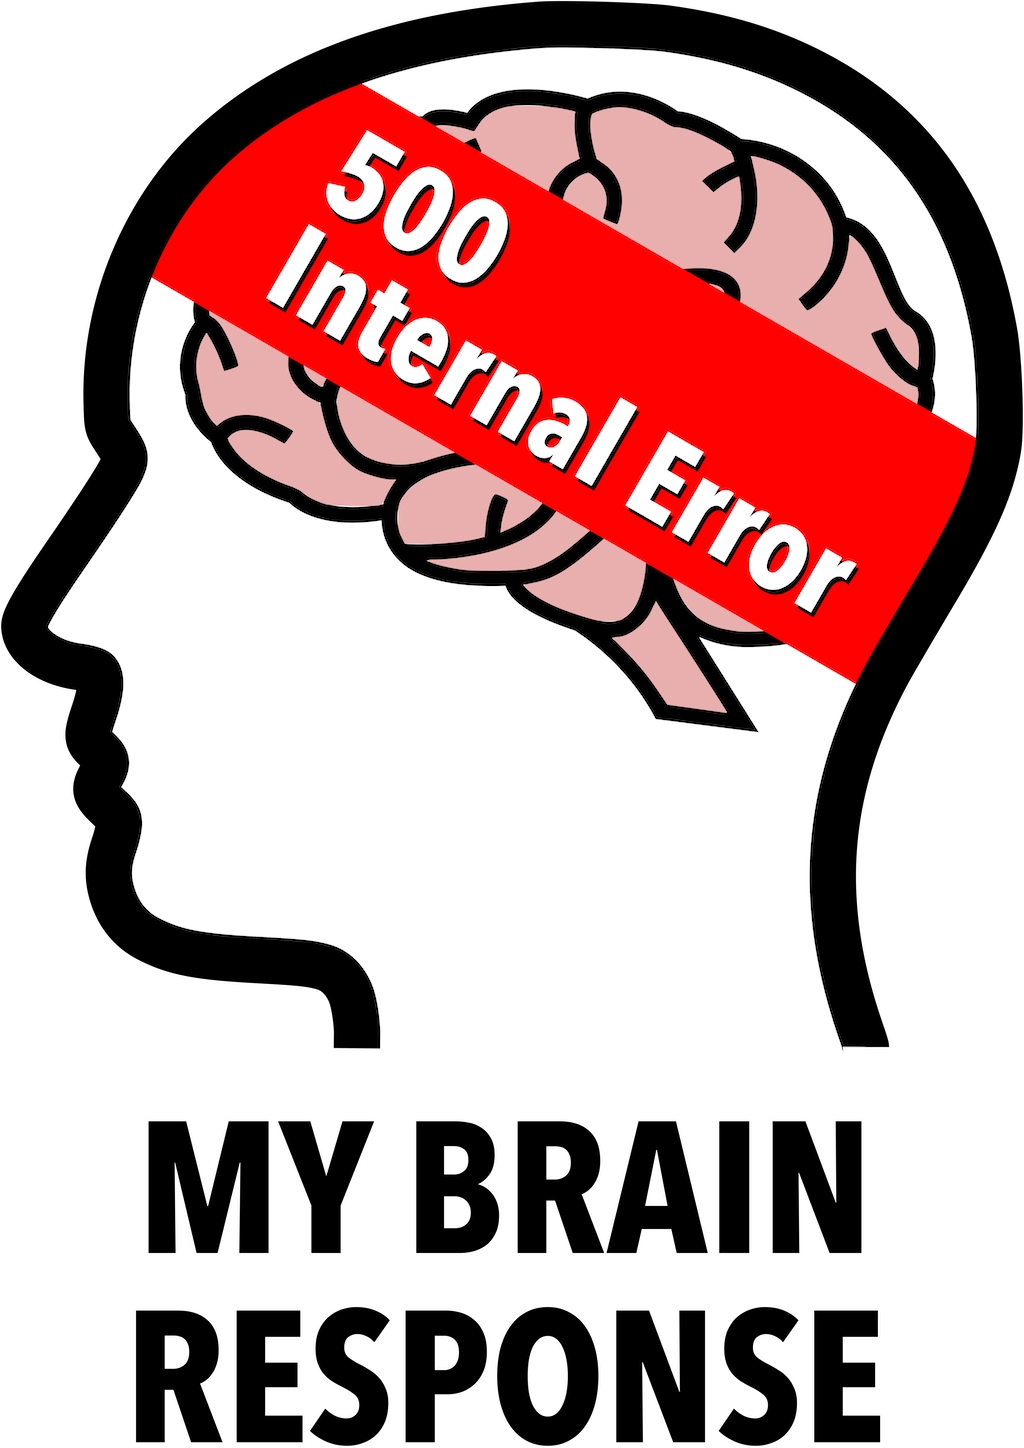 My Brain Response: 500 Internal Error